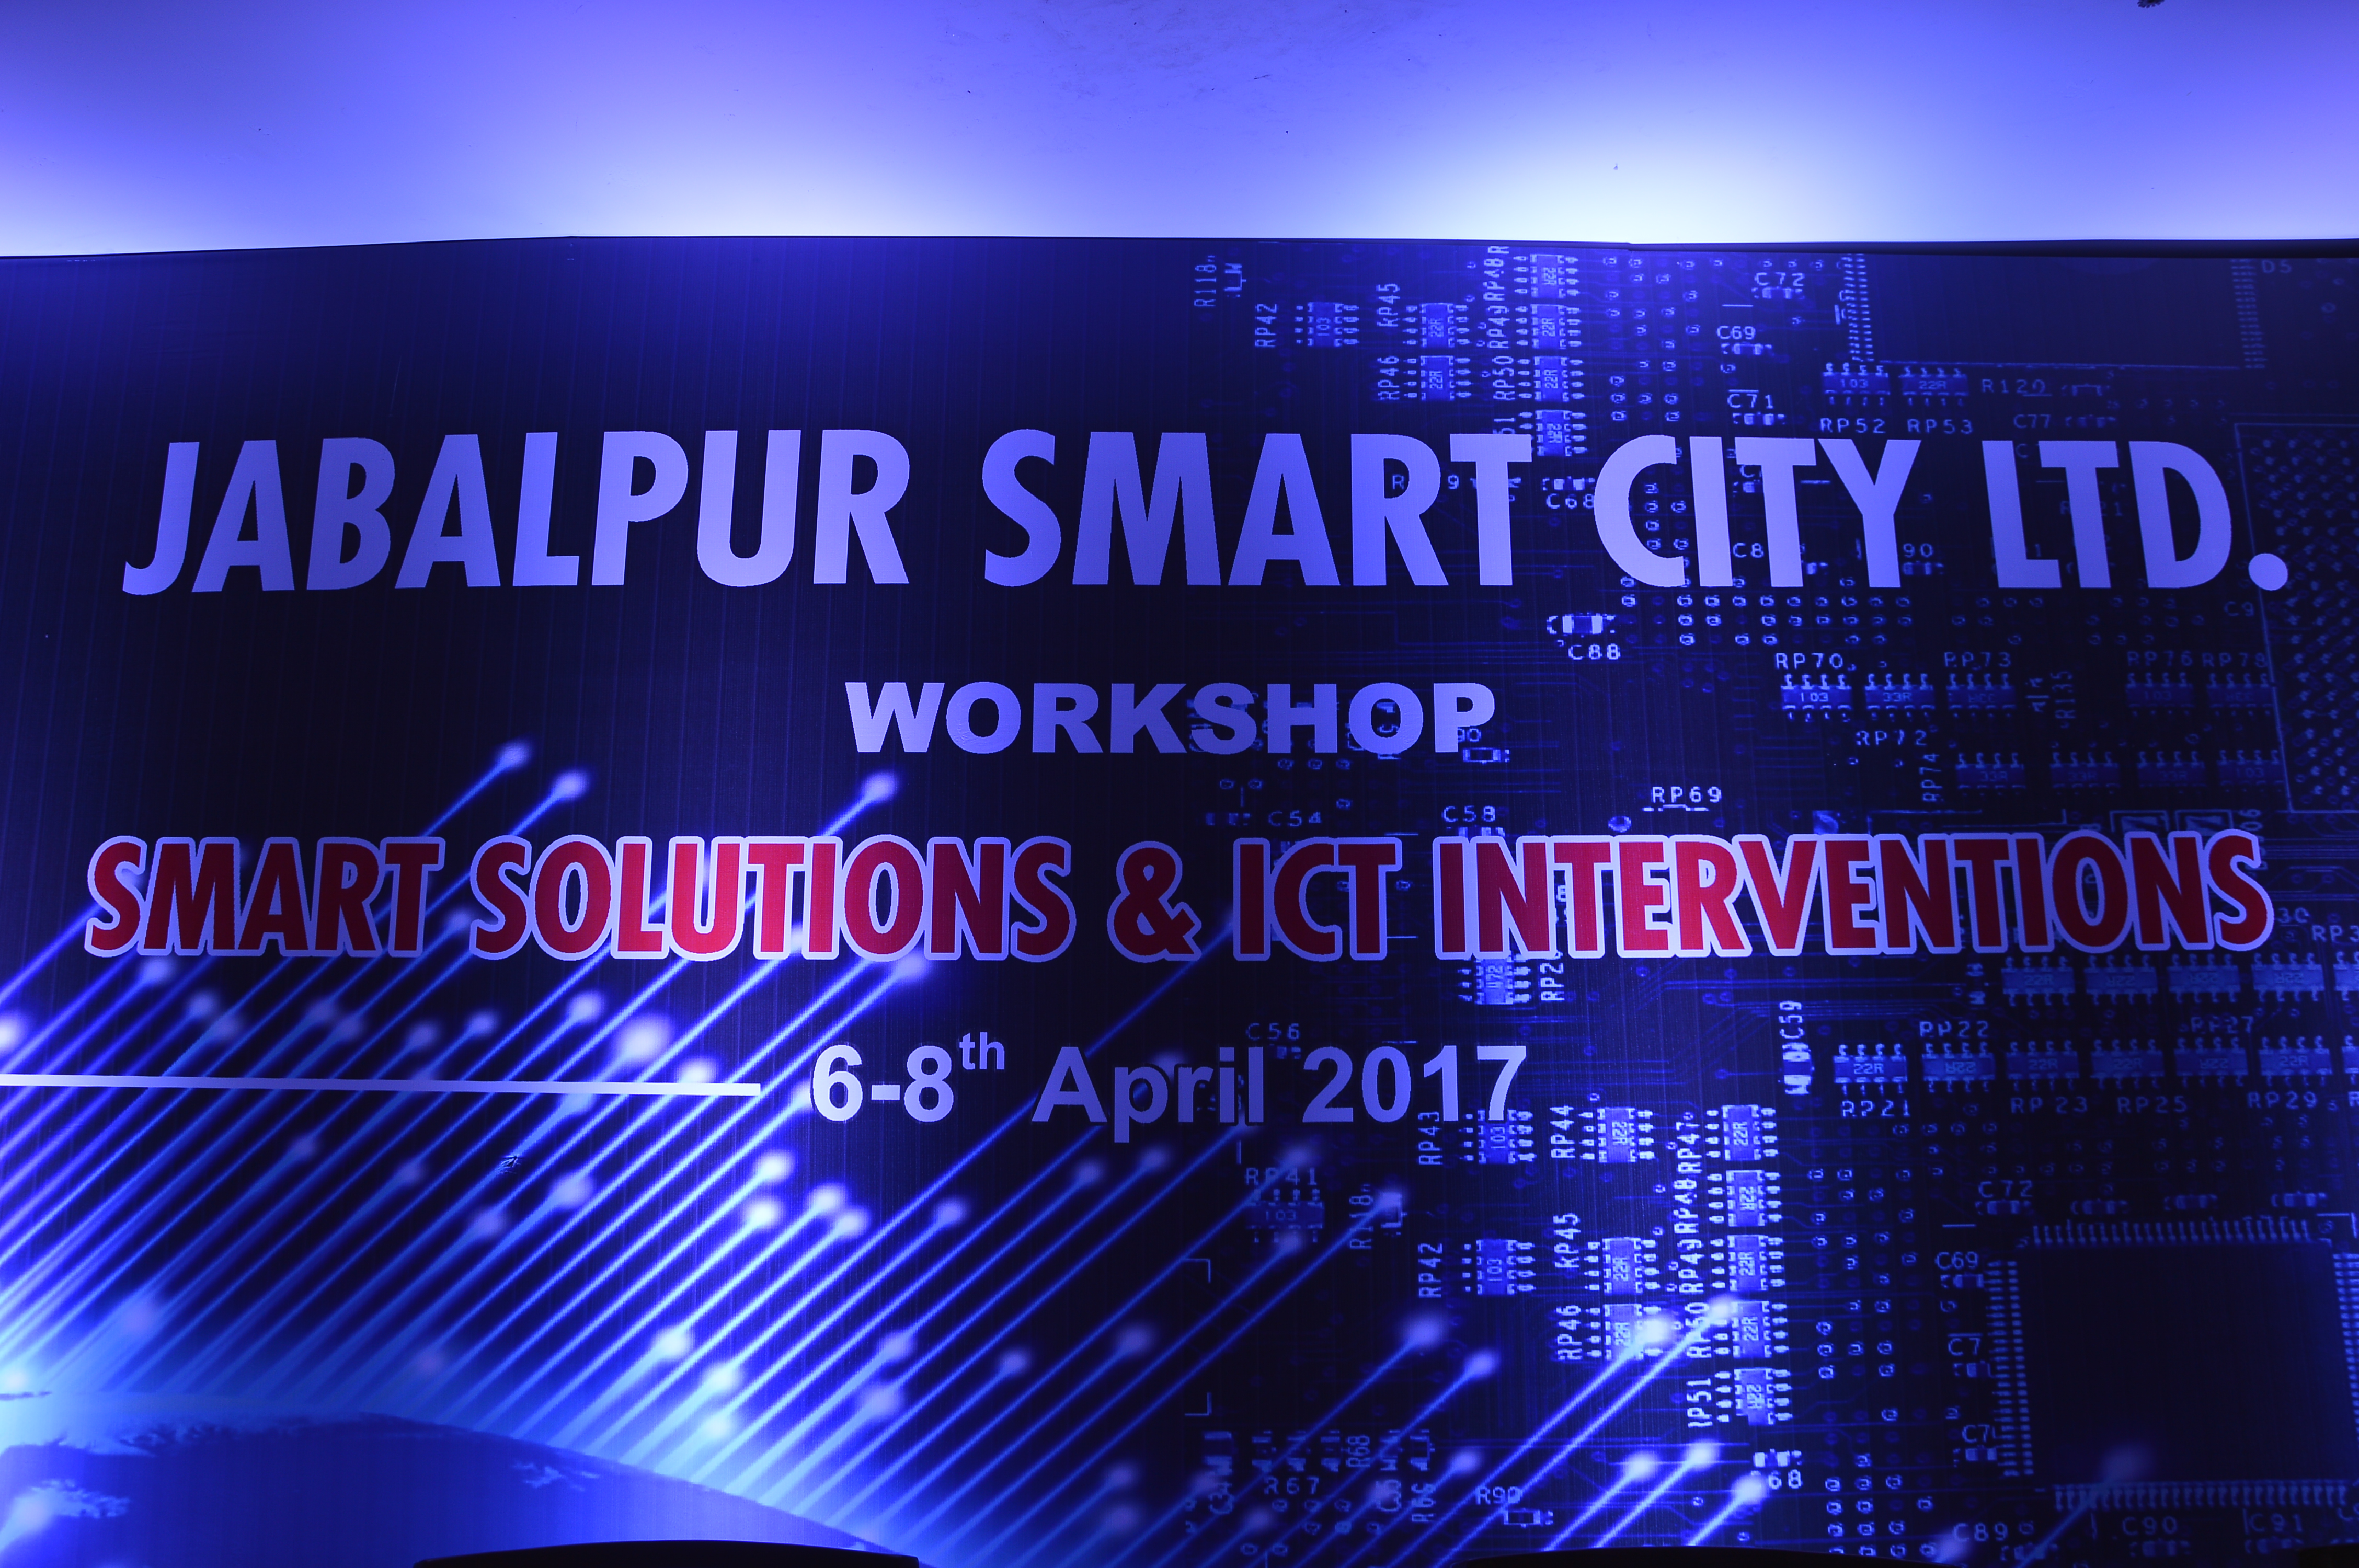 Smart Solutions & ICT Interventions - Workshop By Jabalpur Smart City